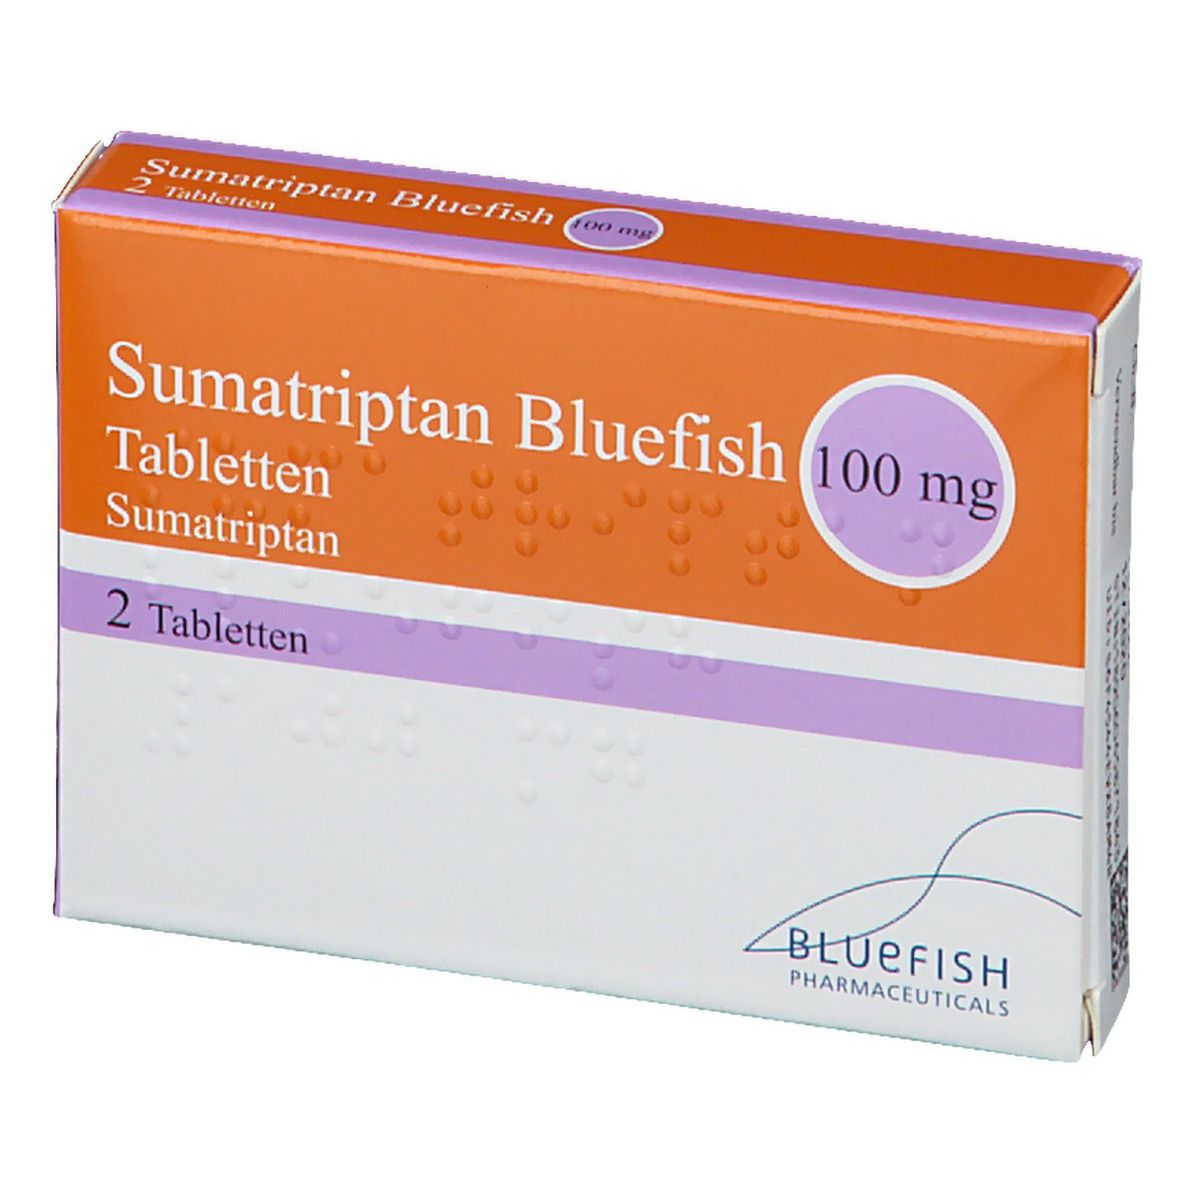 Sumatriptan Bluefish 100 mg